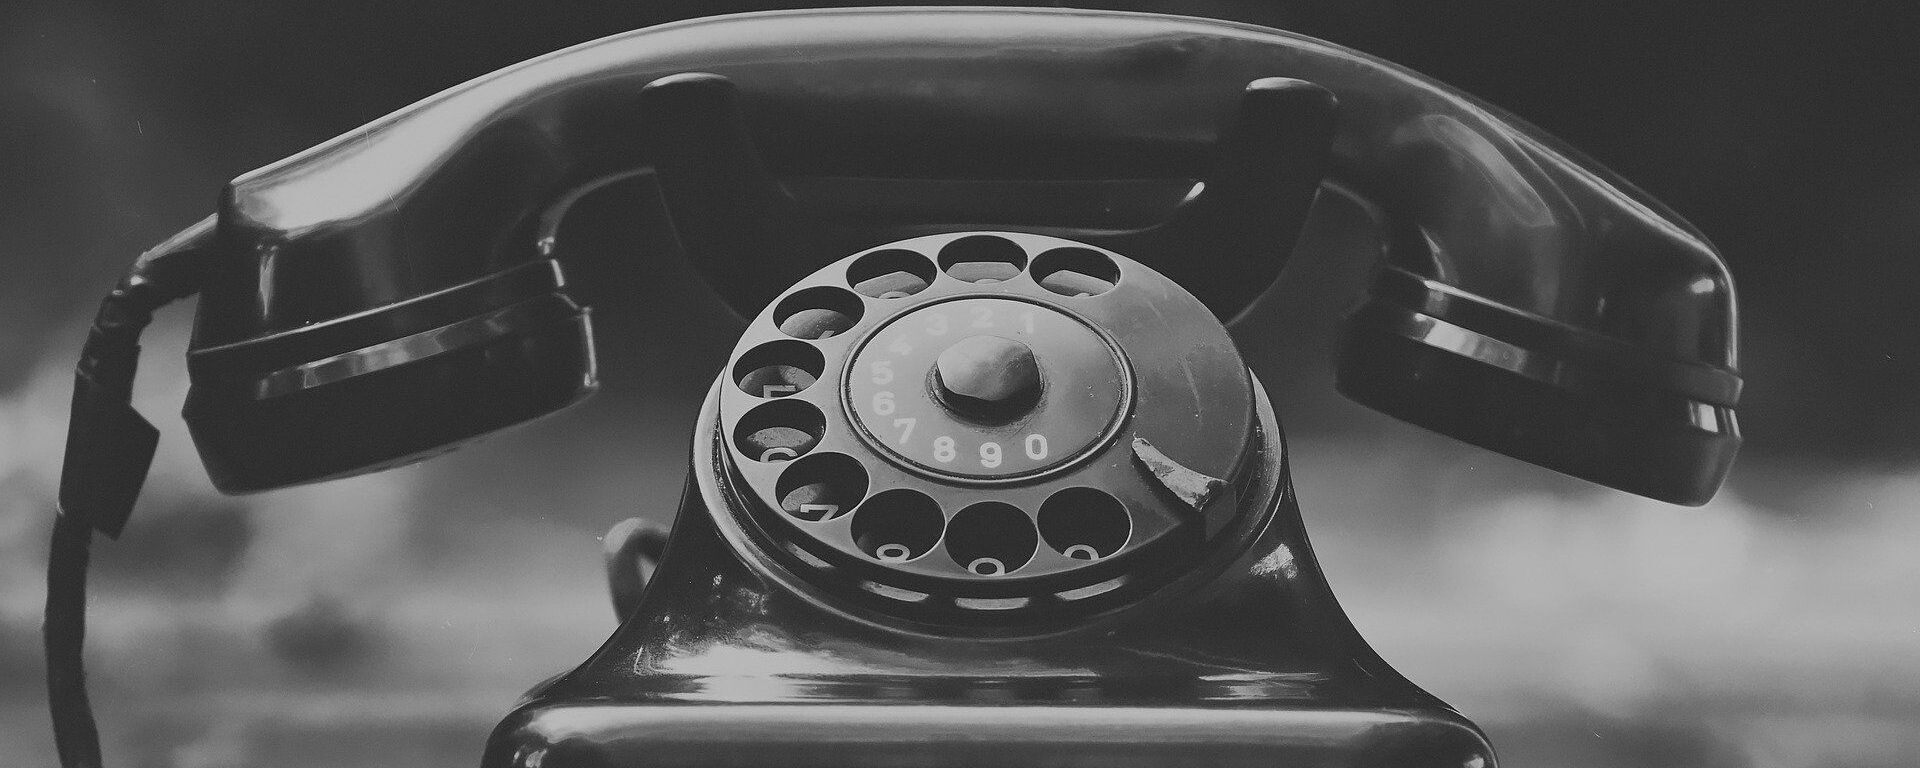 Un teléfono (imagen referencial) - Sputnik Mundo, 1920, 19.01.2021